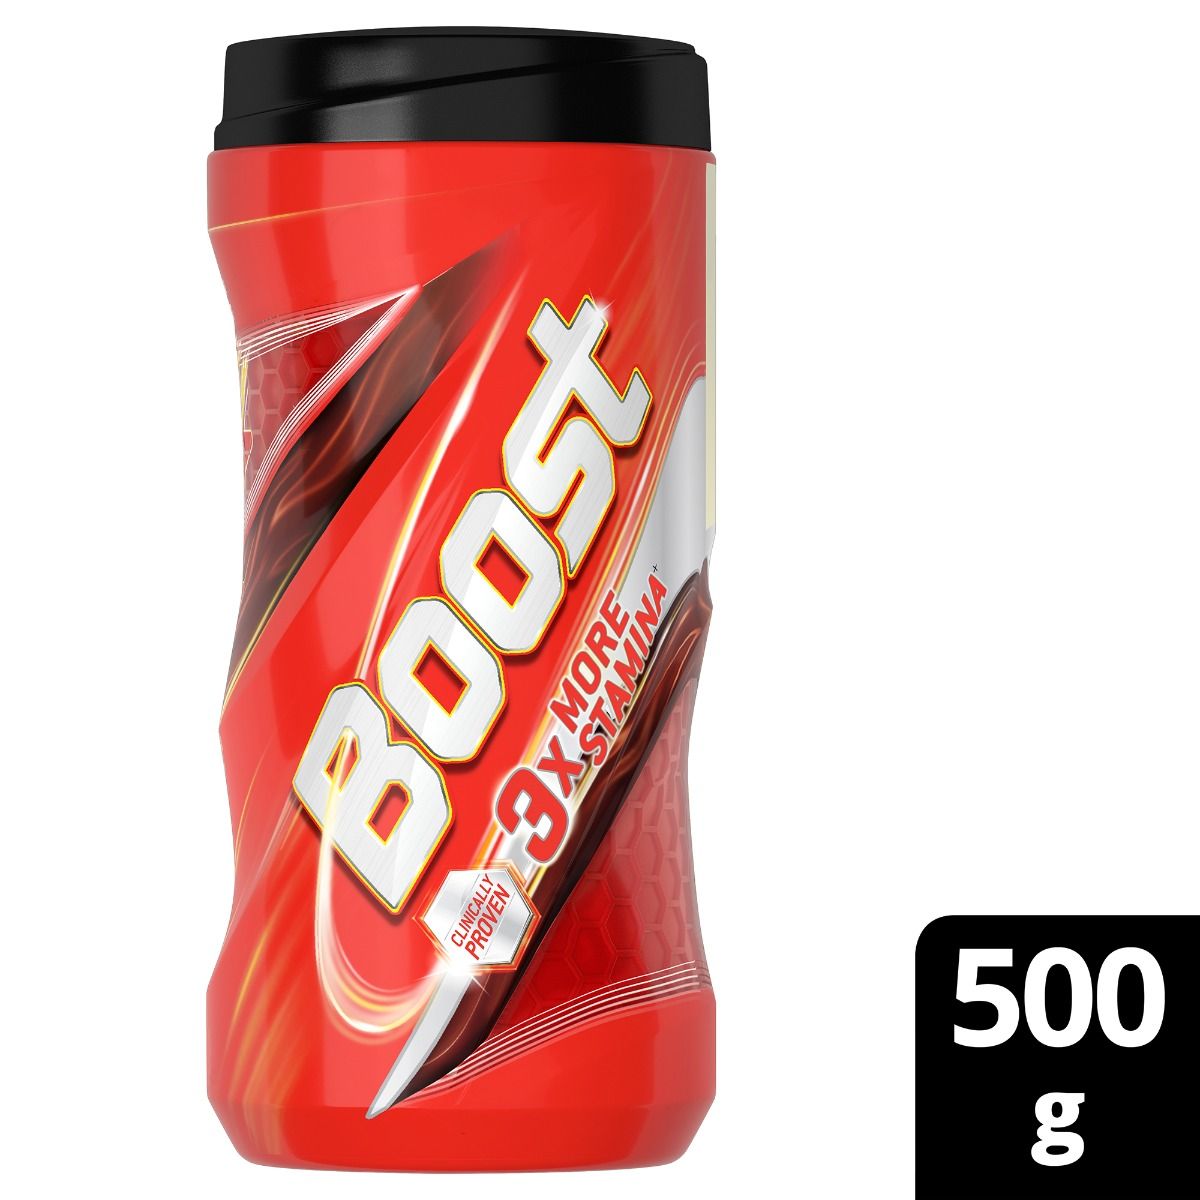 Boost Health & Nutrition Drink, 500 gm Jar, Pack of 1 